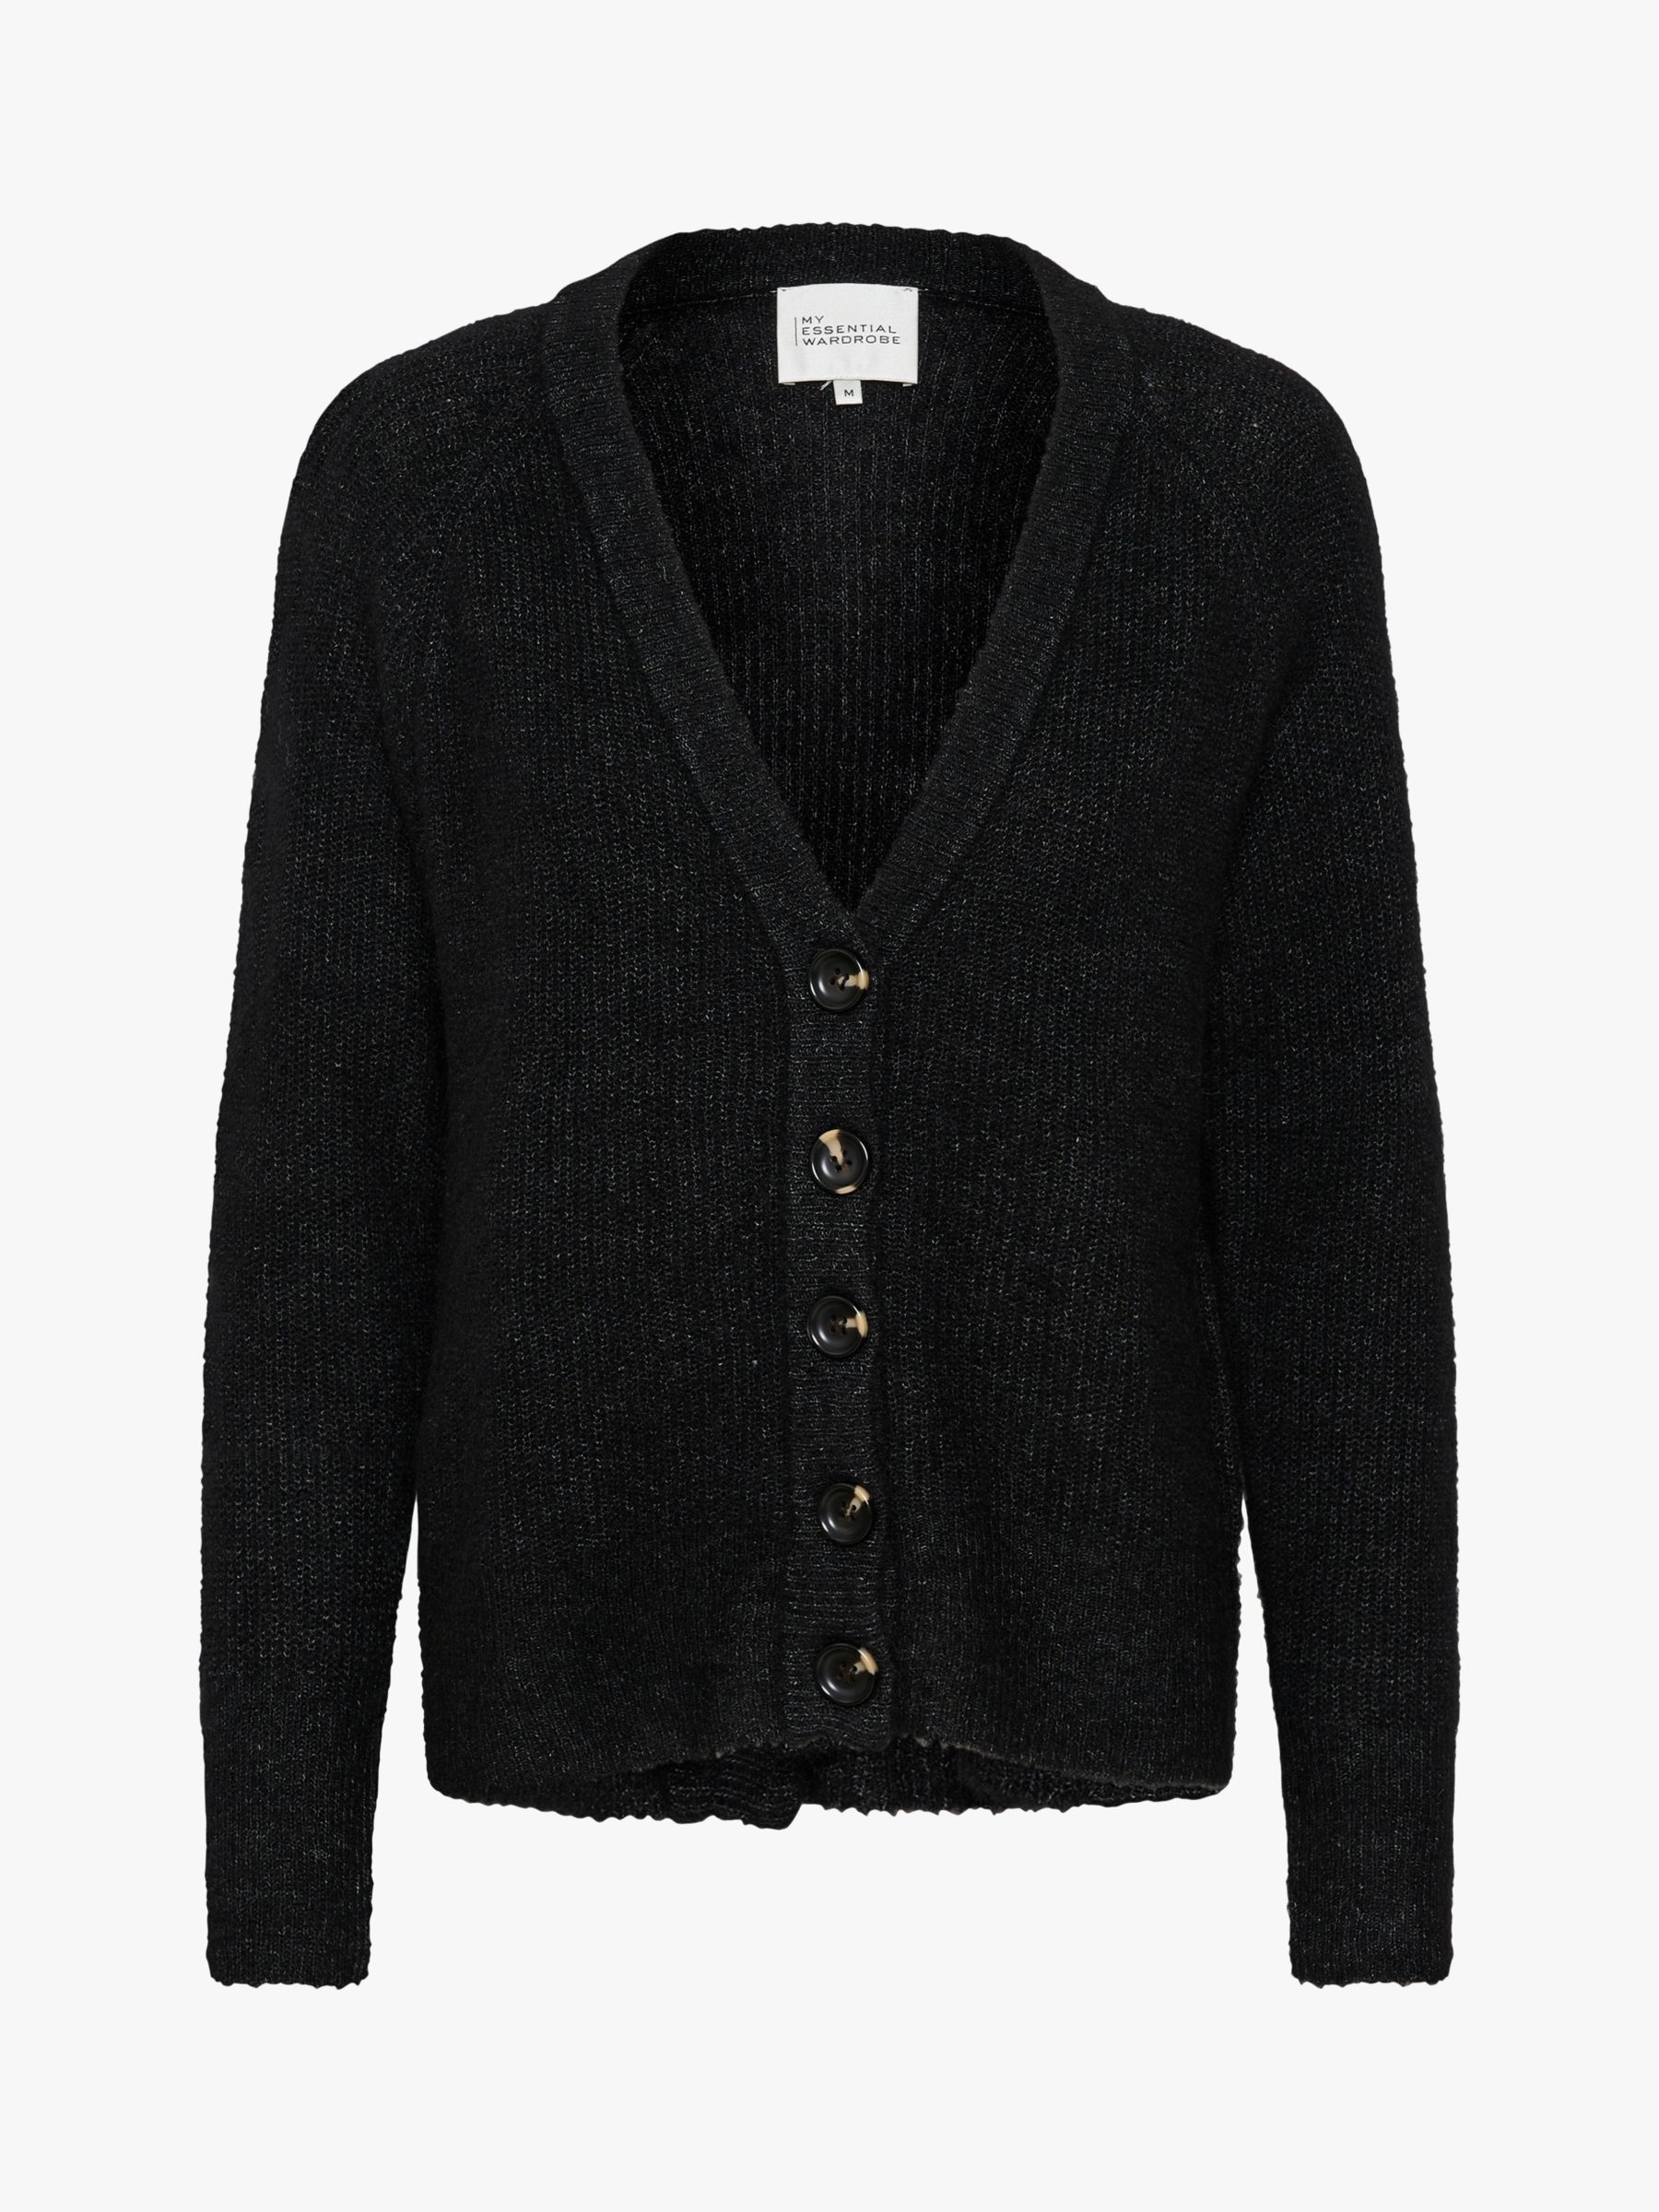 Buy MY ESSENTIAL WARDROBE Button Knit Wool Blend Cardigan Online at johnlewis.com